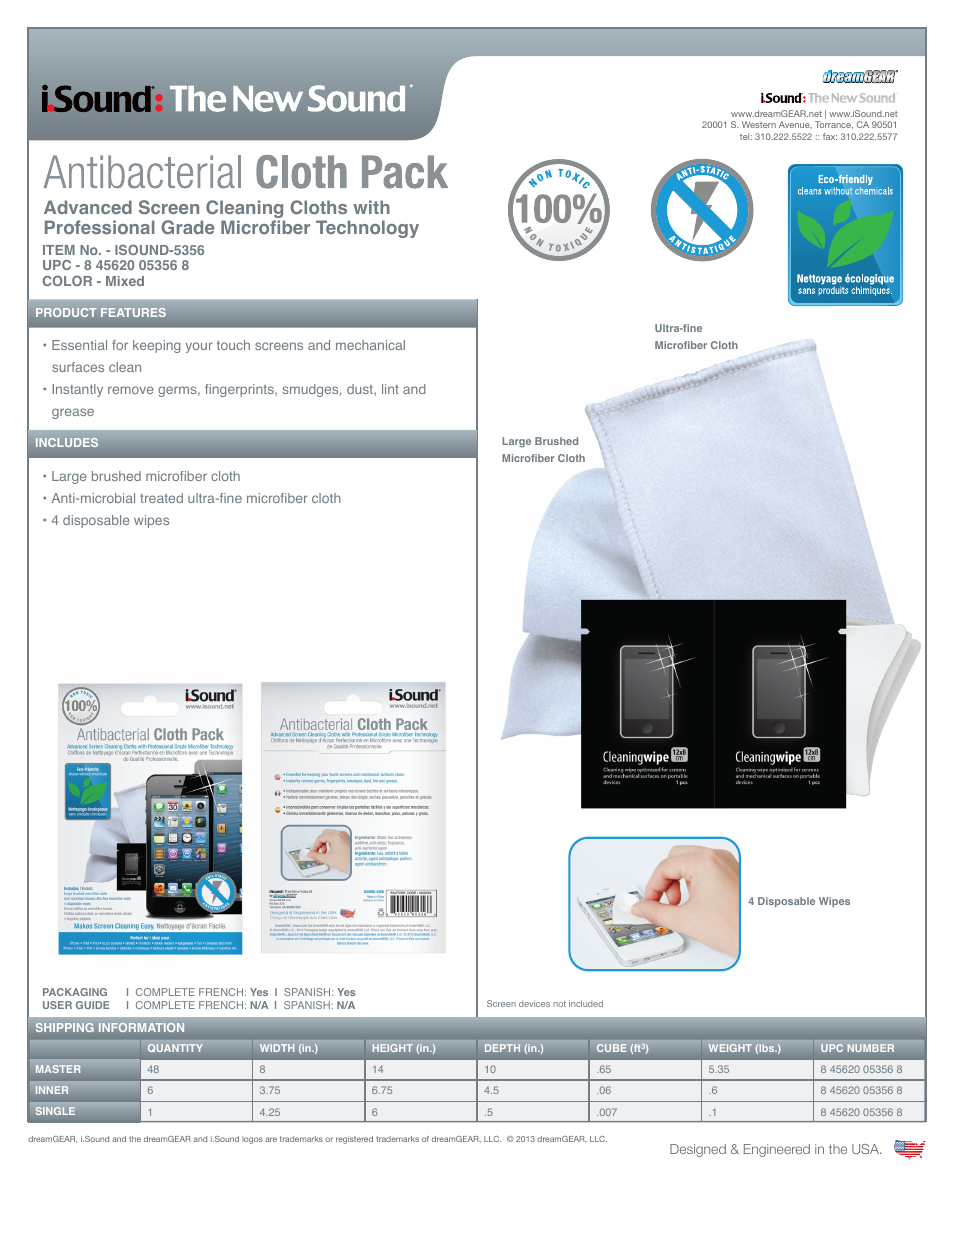 Antibacterial Cloth Pack - Sell Sheet